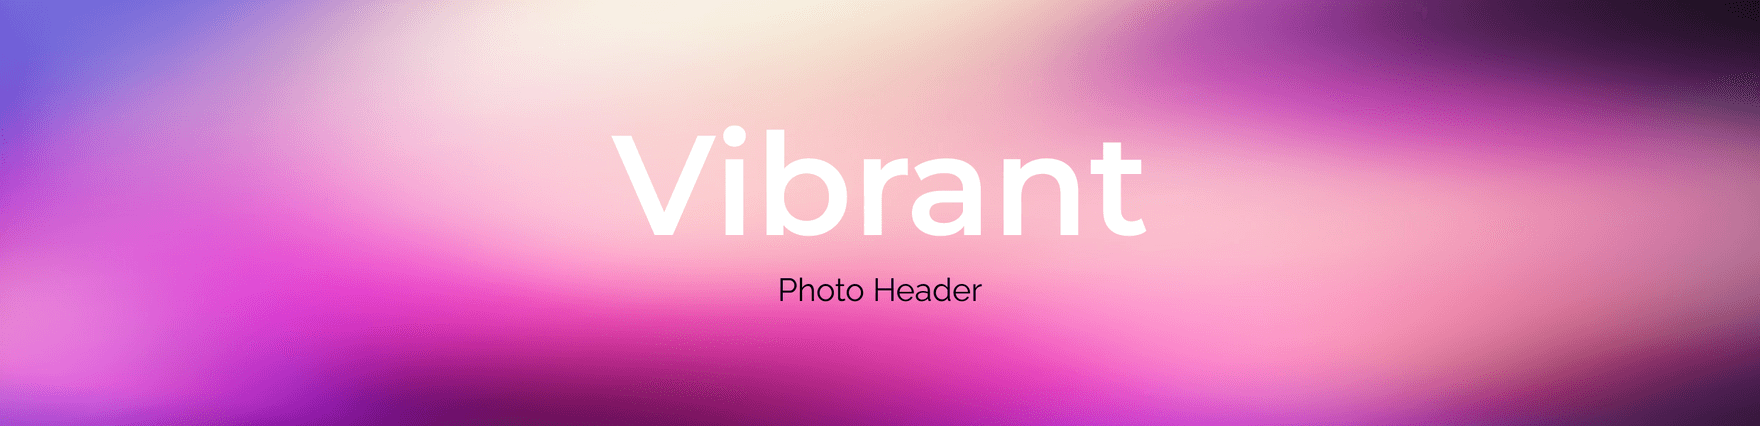 Vibrant Photo Header Template